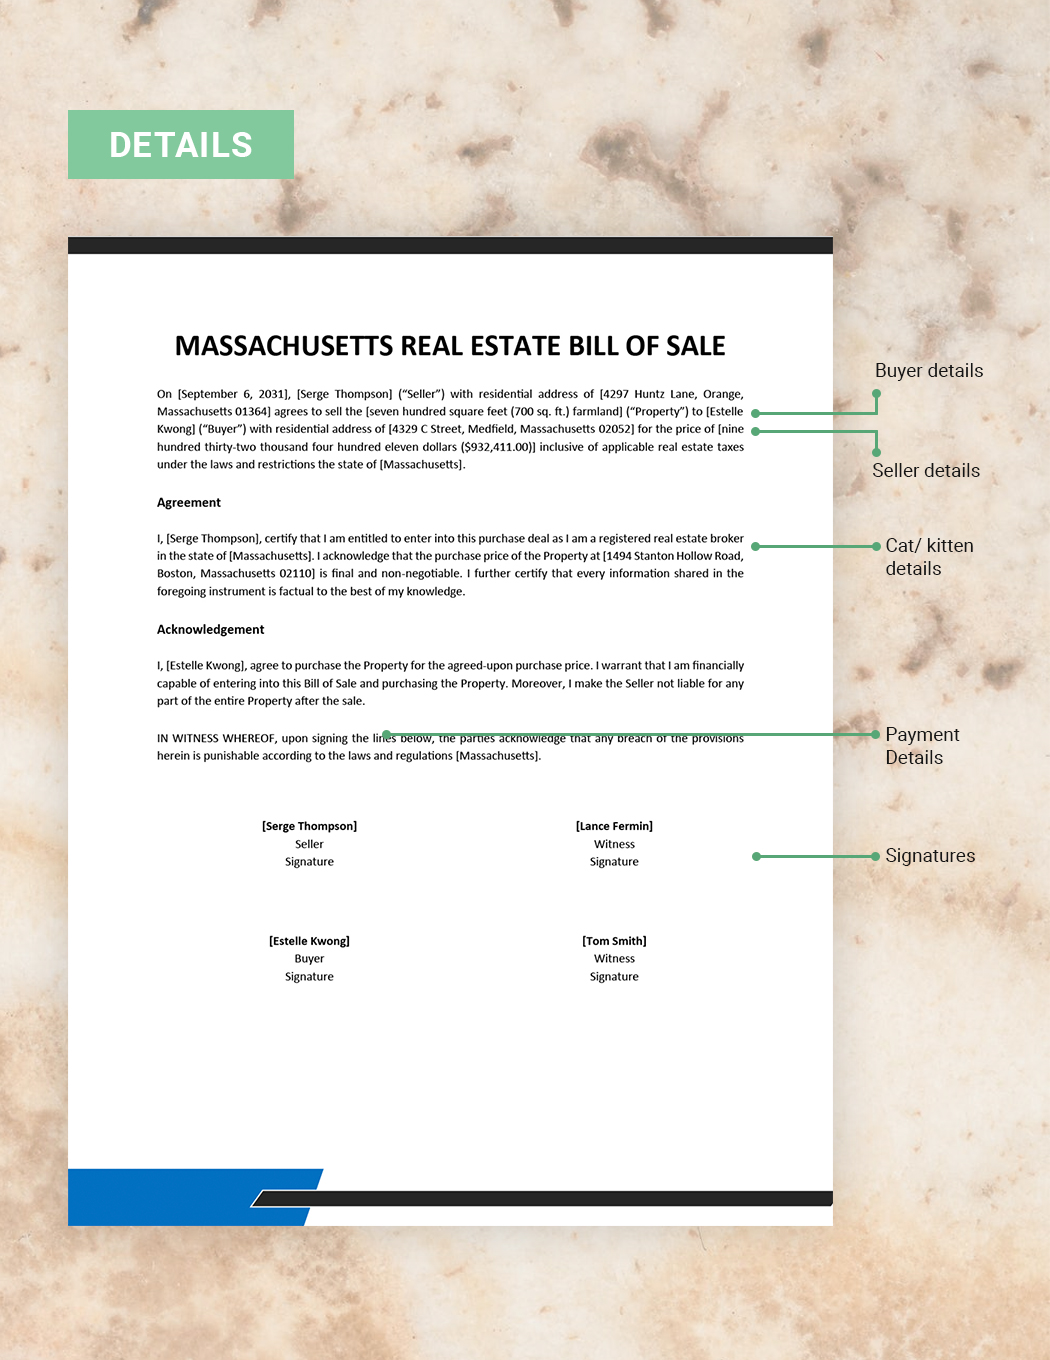 Massachusetts Real Estate Bill of Sale Template